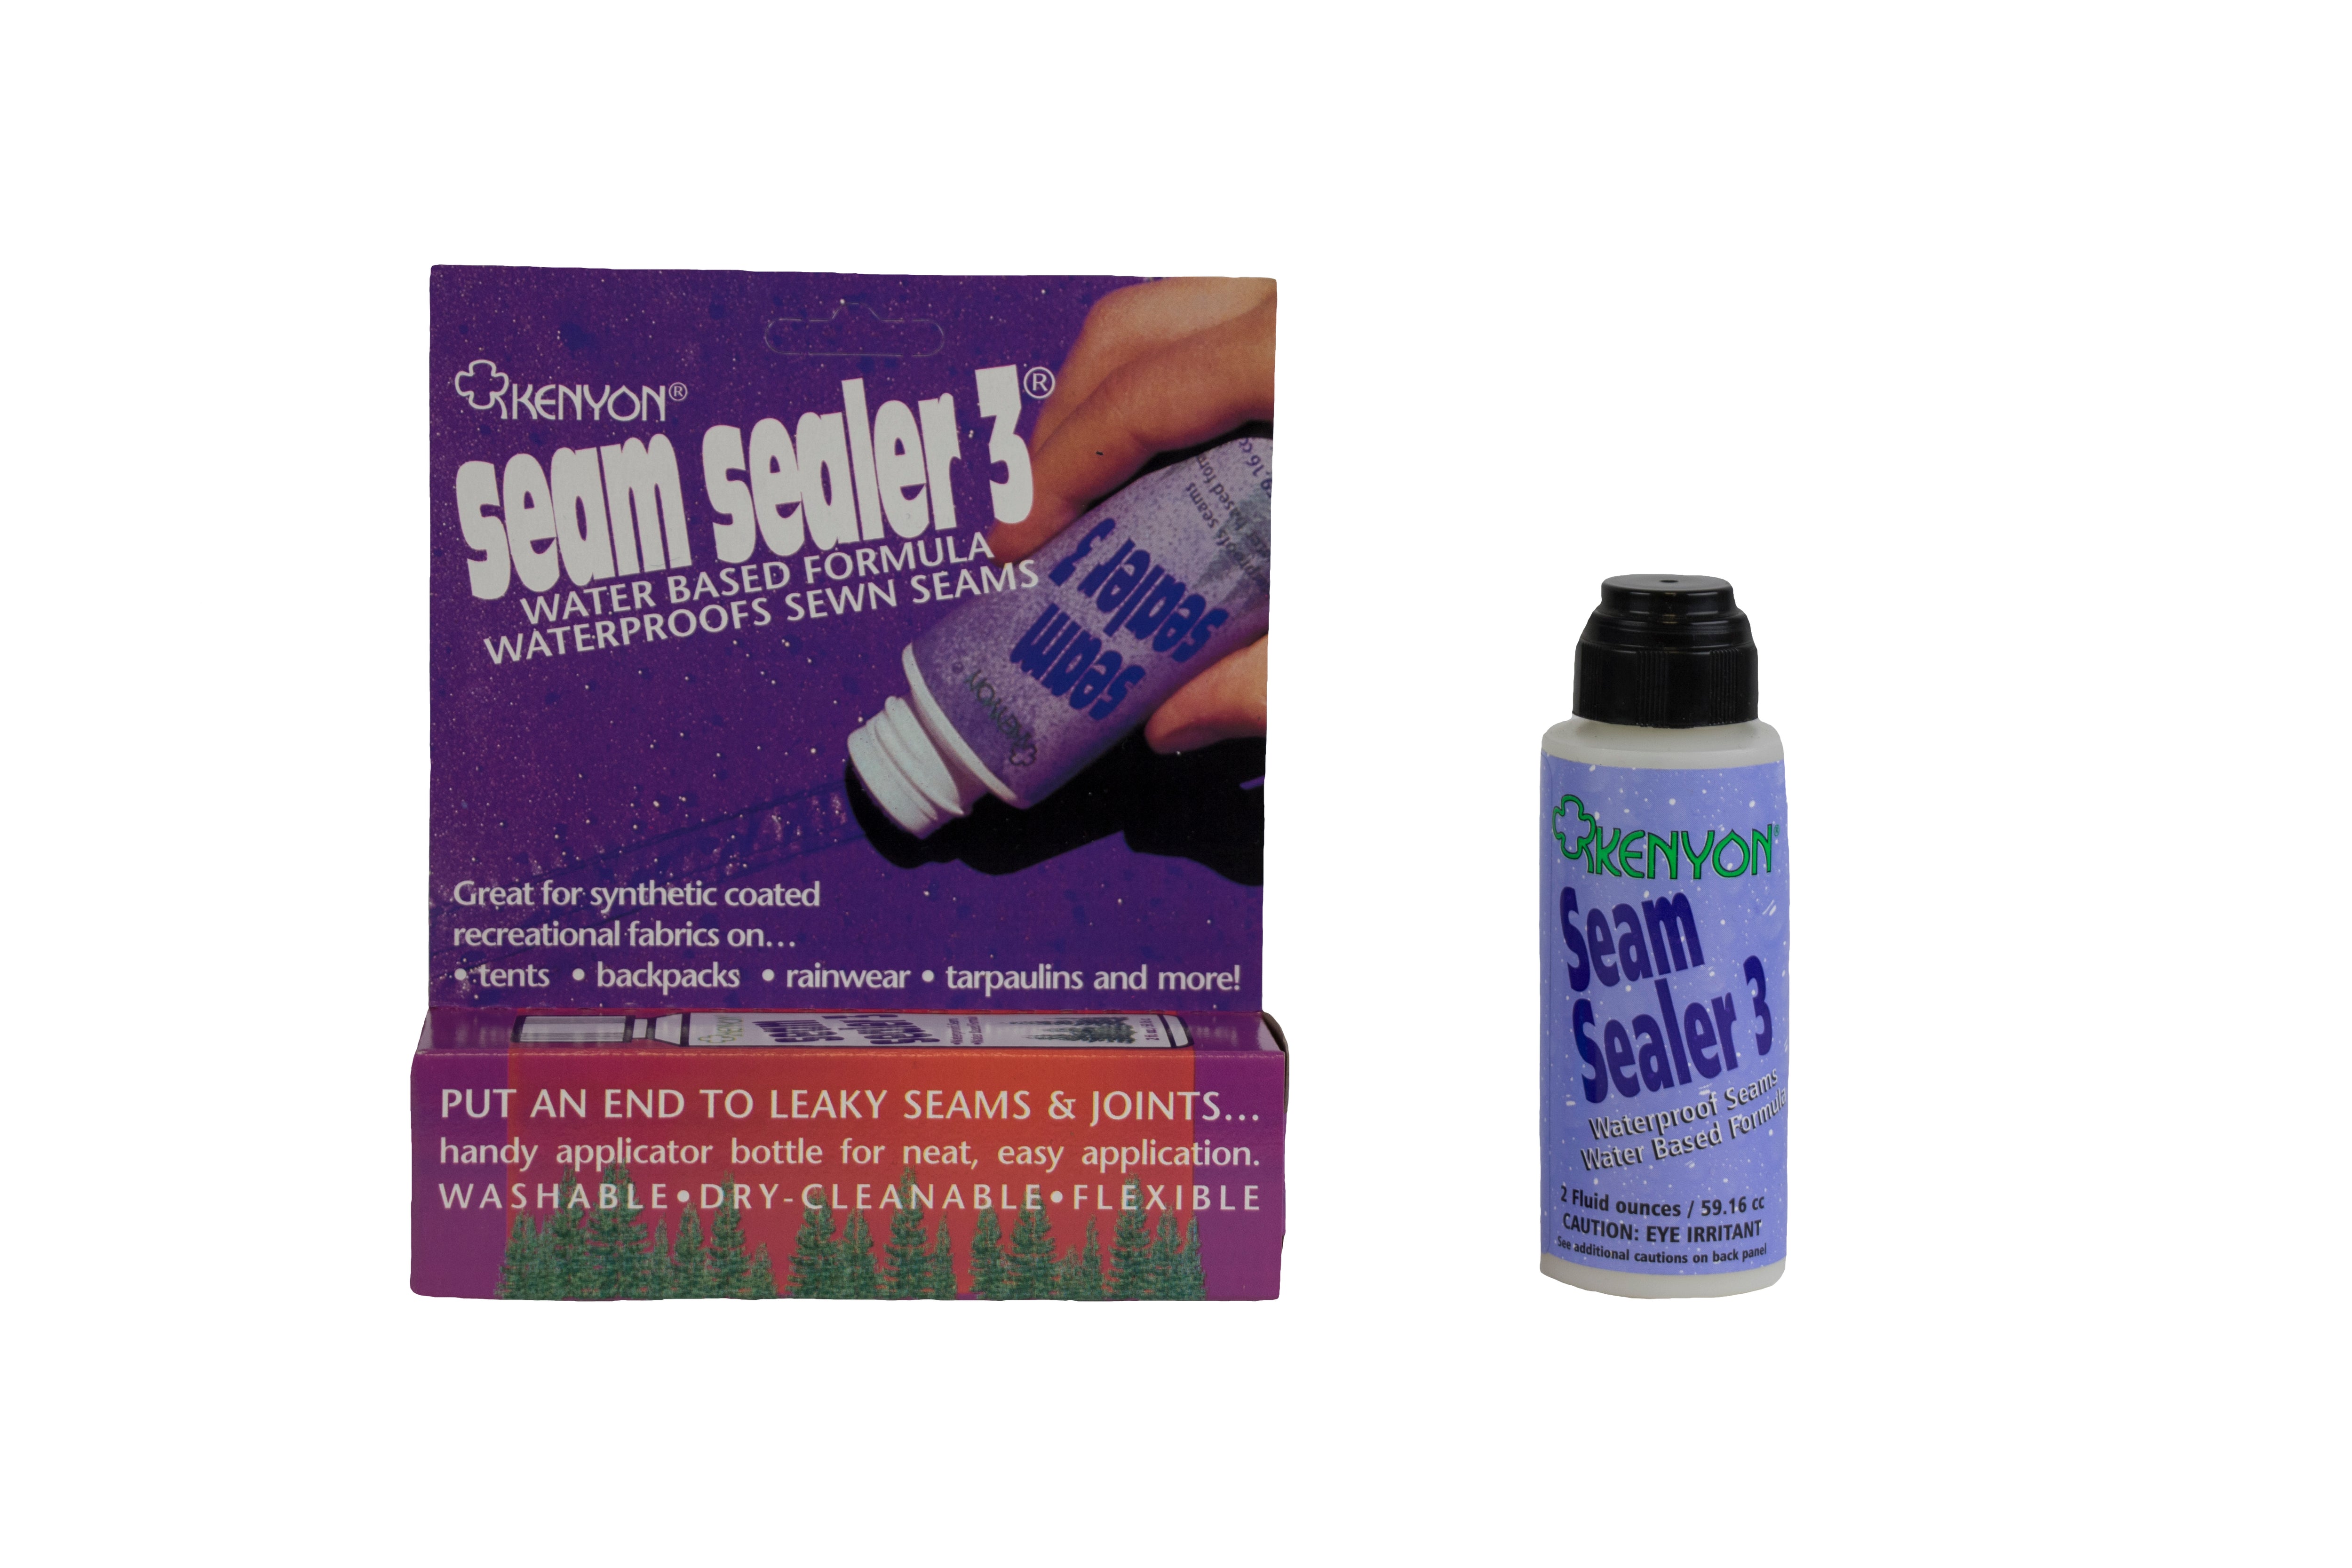 Reefer-Galler 15 oz. SLA Cedar Scented Spray (3-Pack) 1474.3 - The